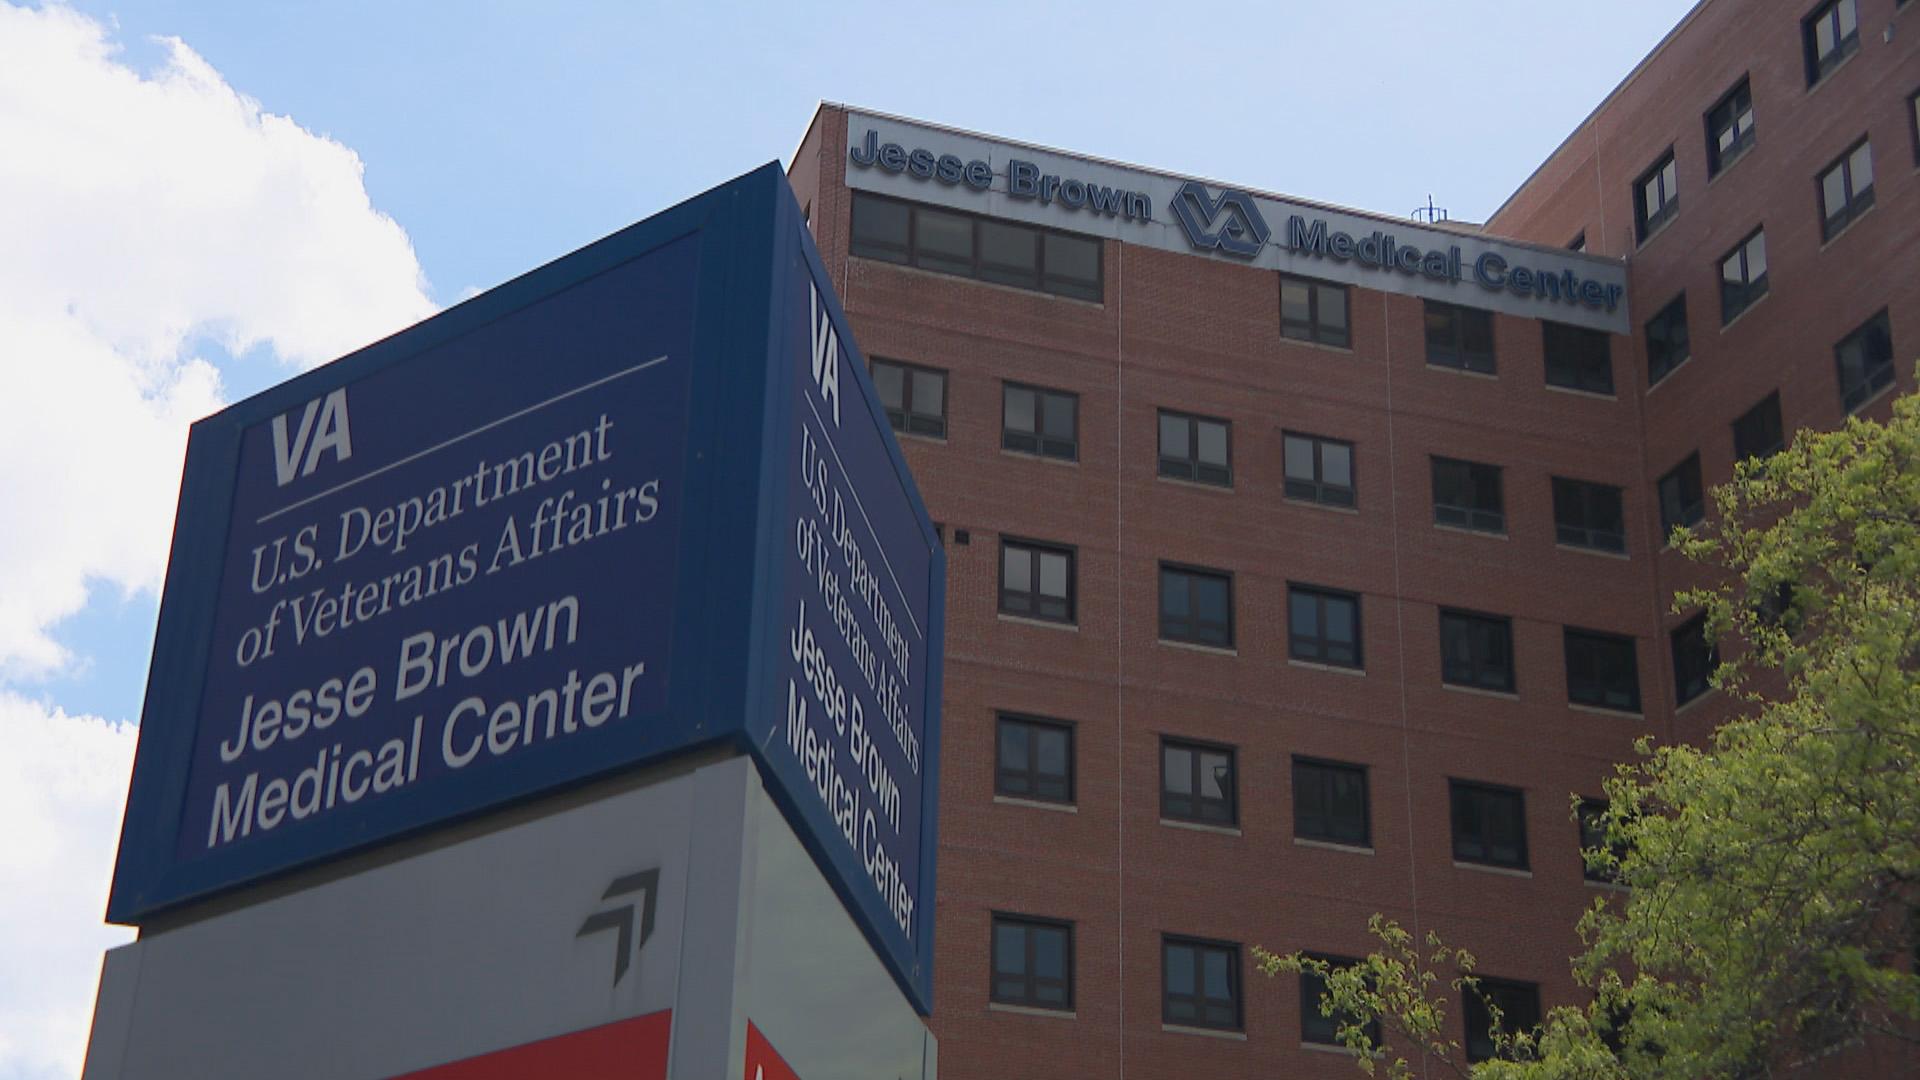 The Jesse Brown VA Medical Center in Chicago. (WTTW News)